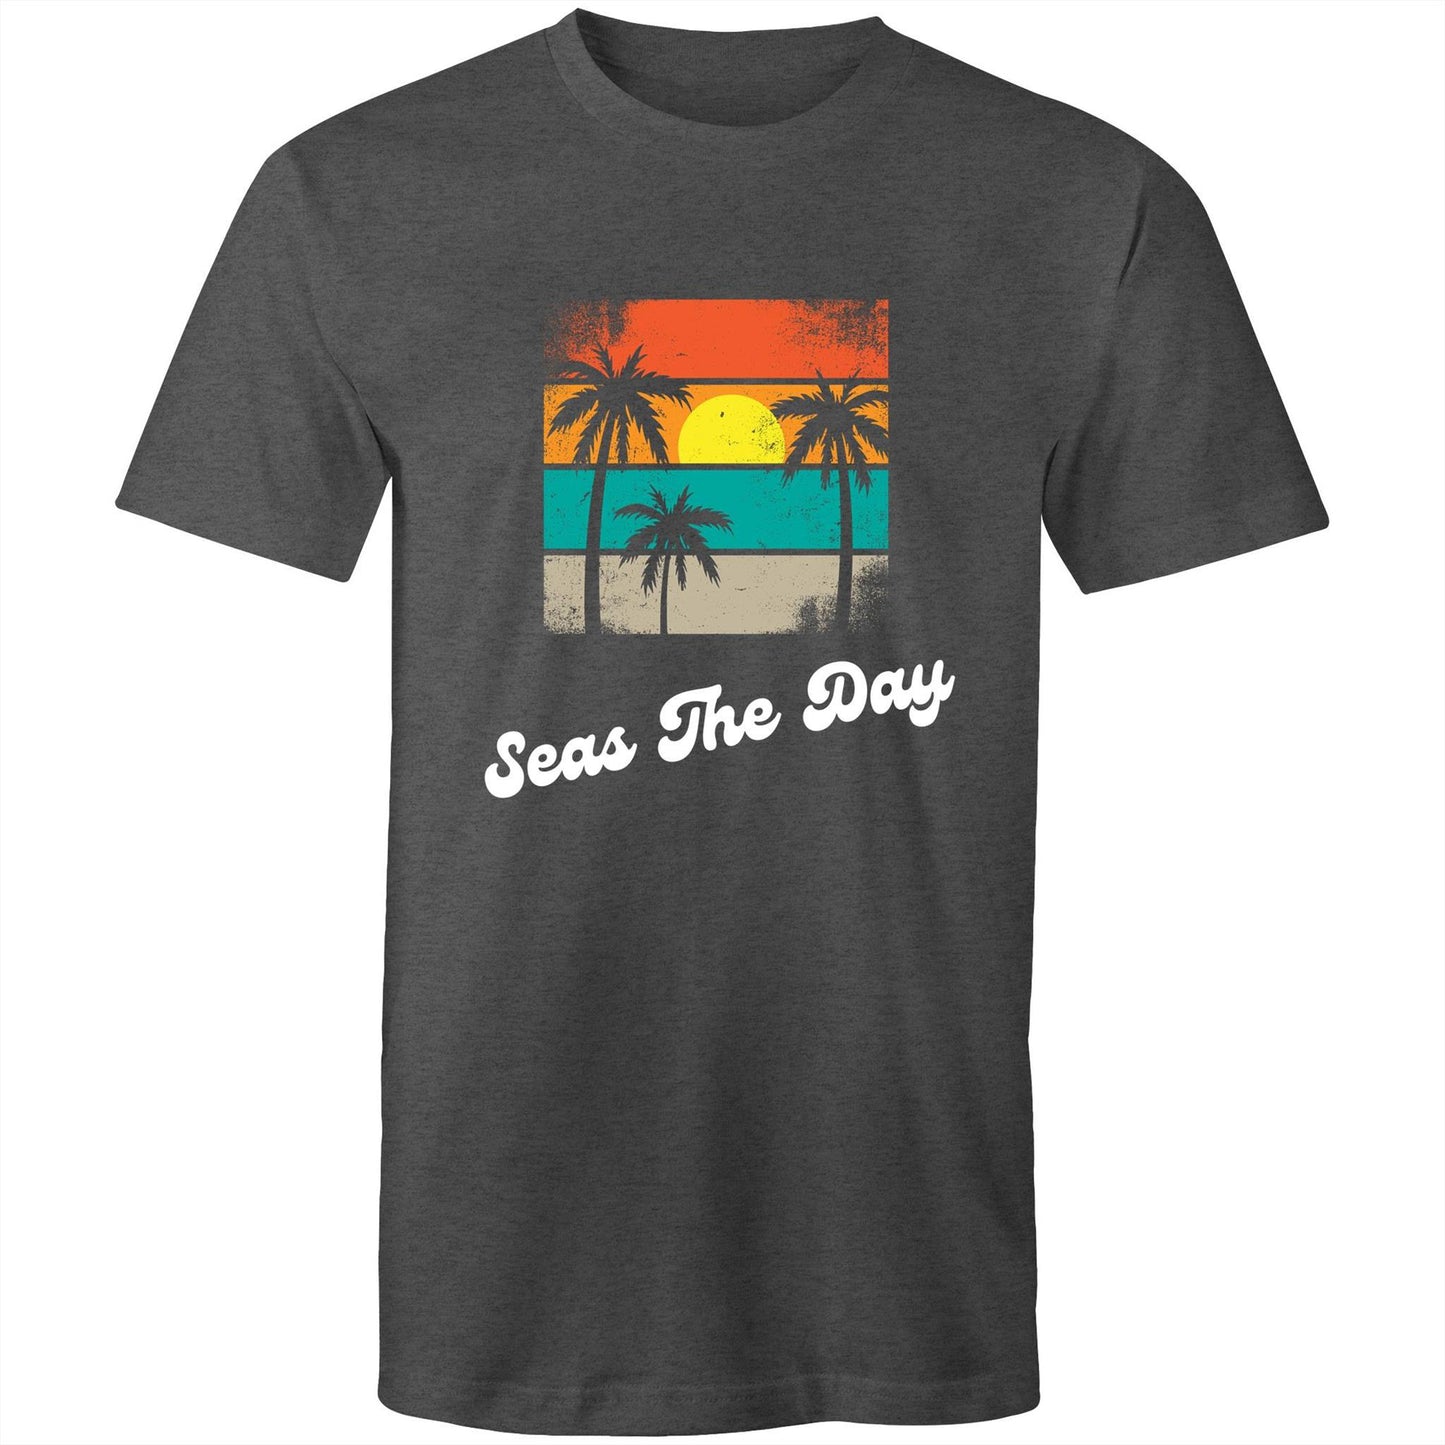 Seas The Day - Mens T-Shirt